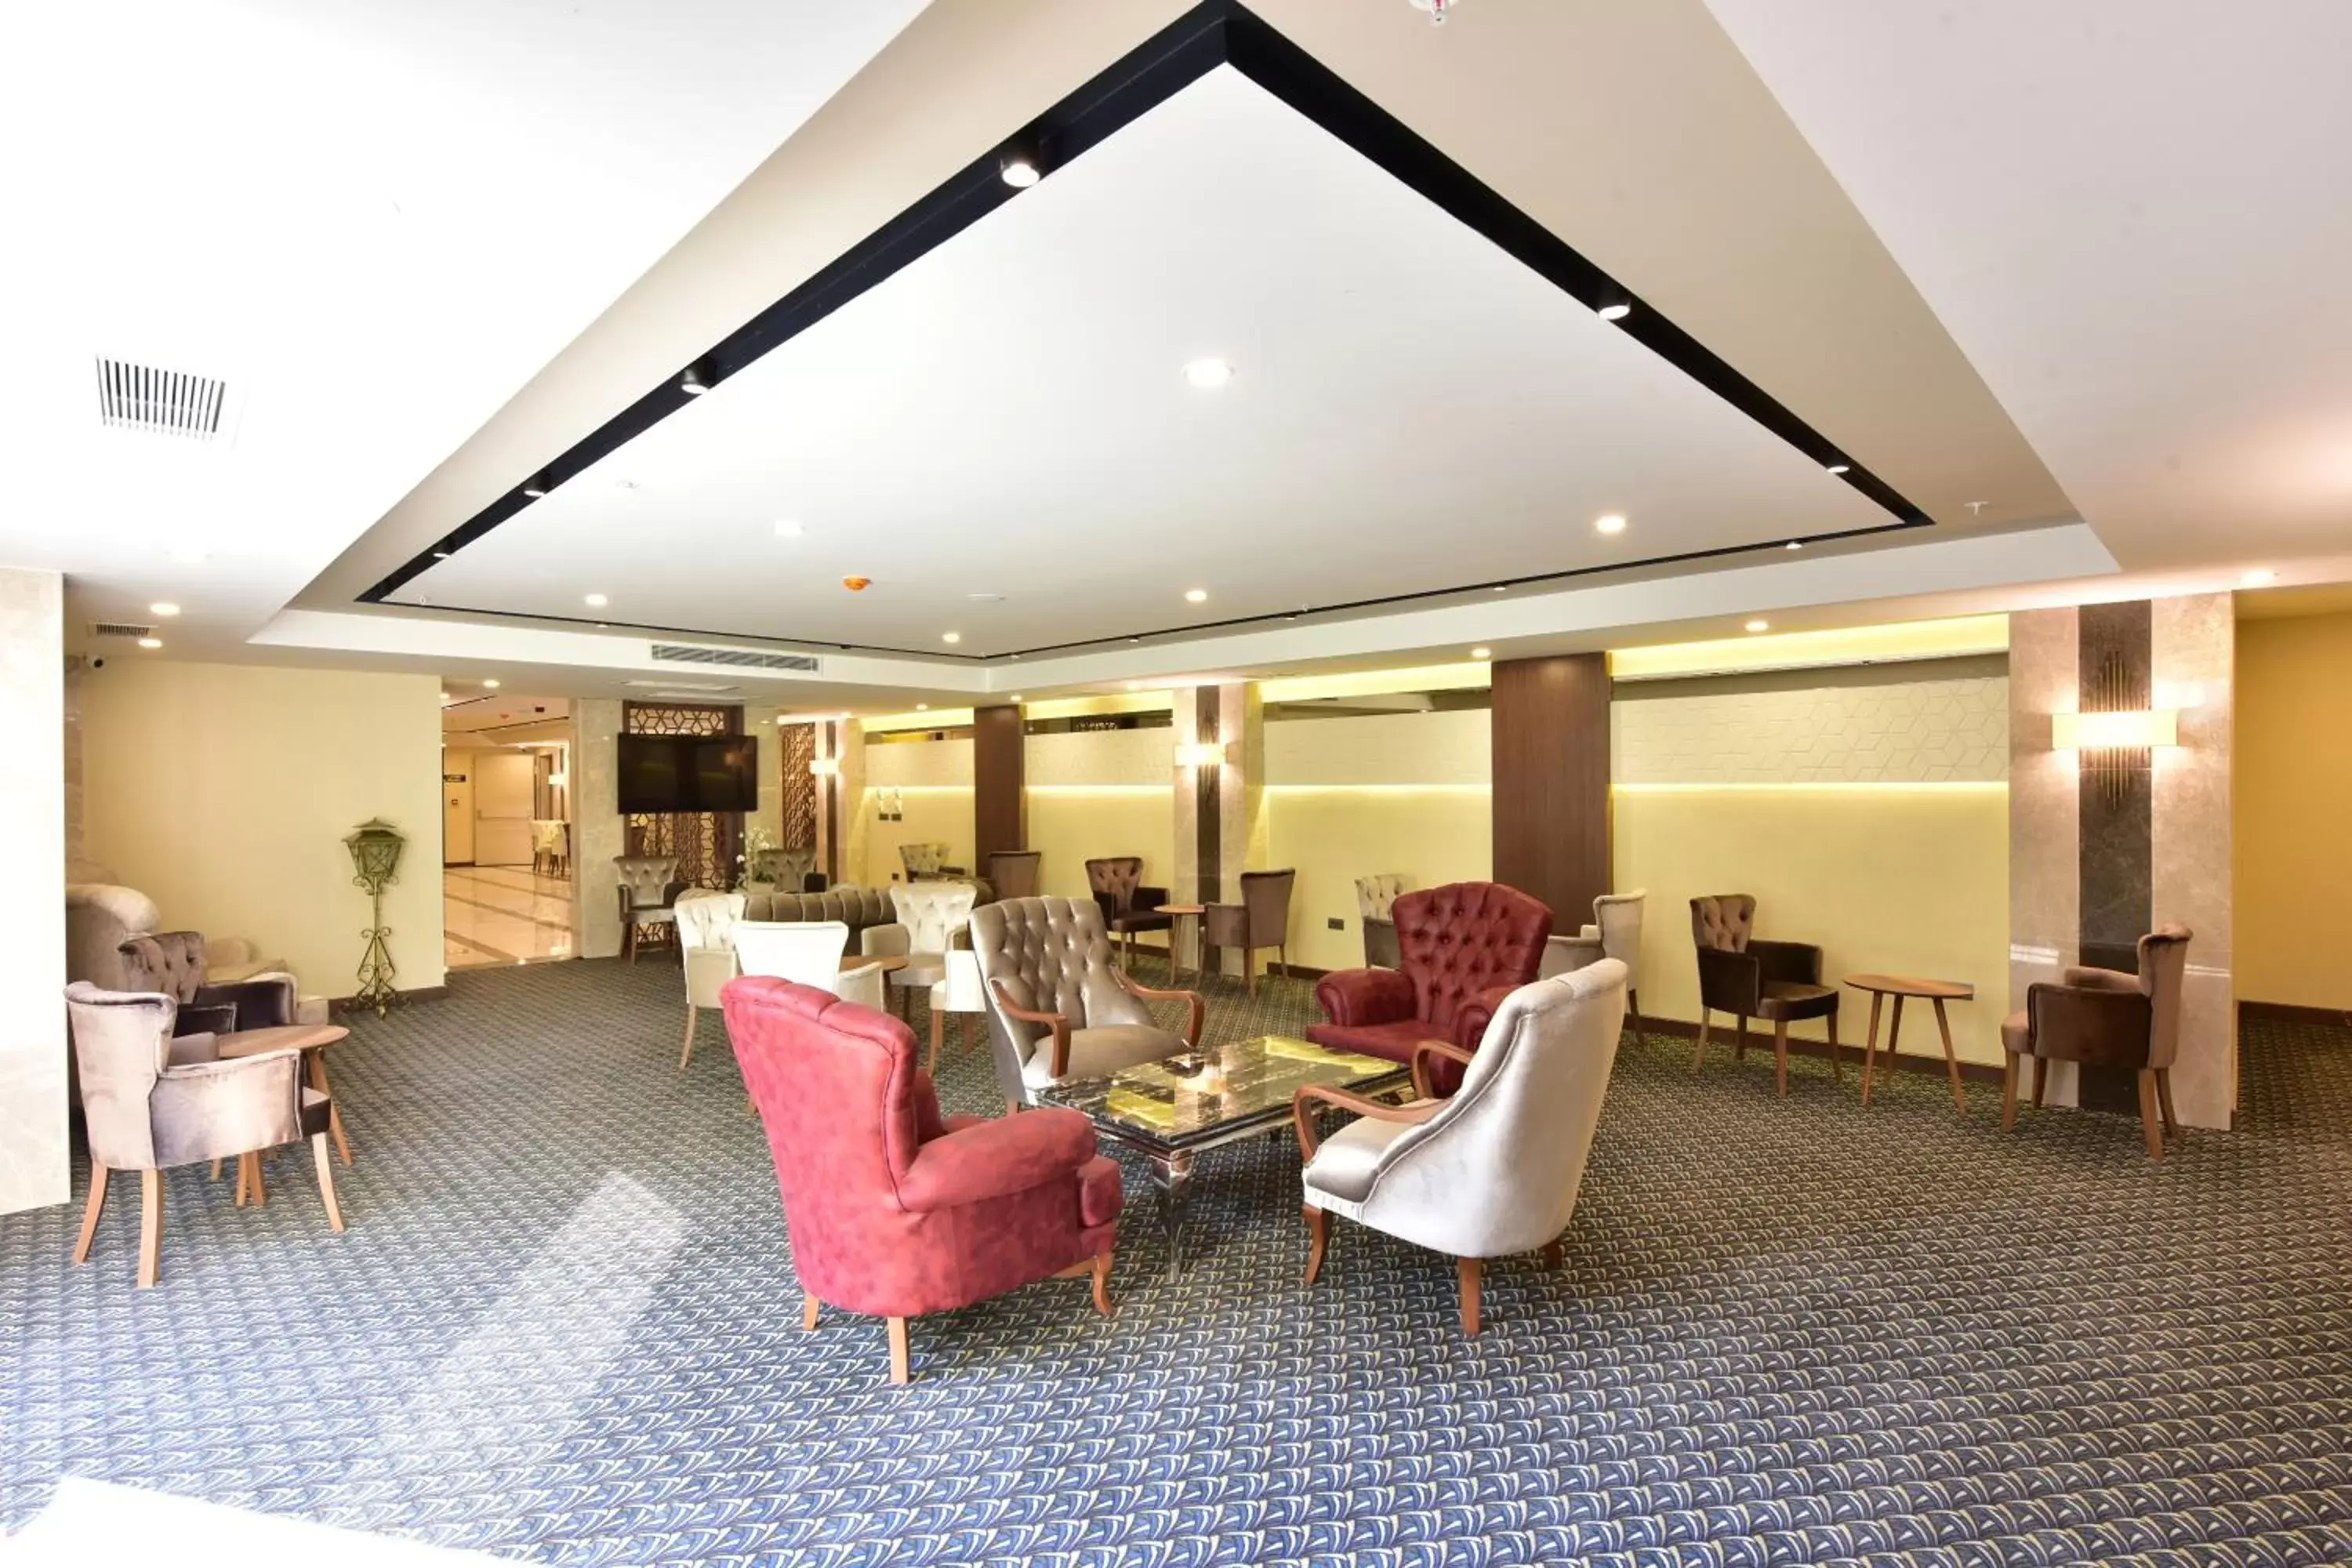 Lobby or reception in Vespia Hotel